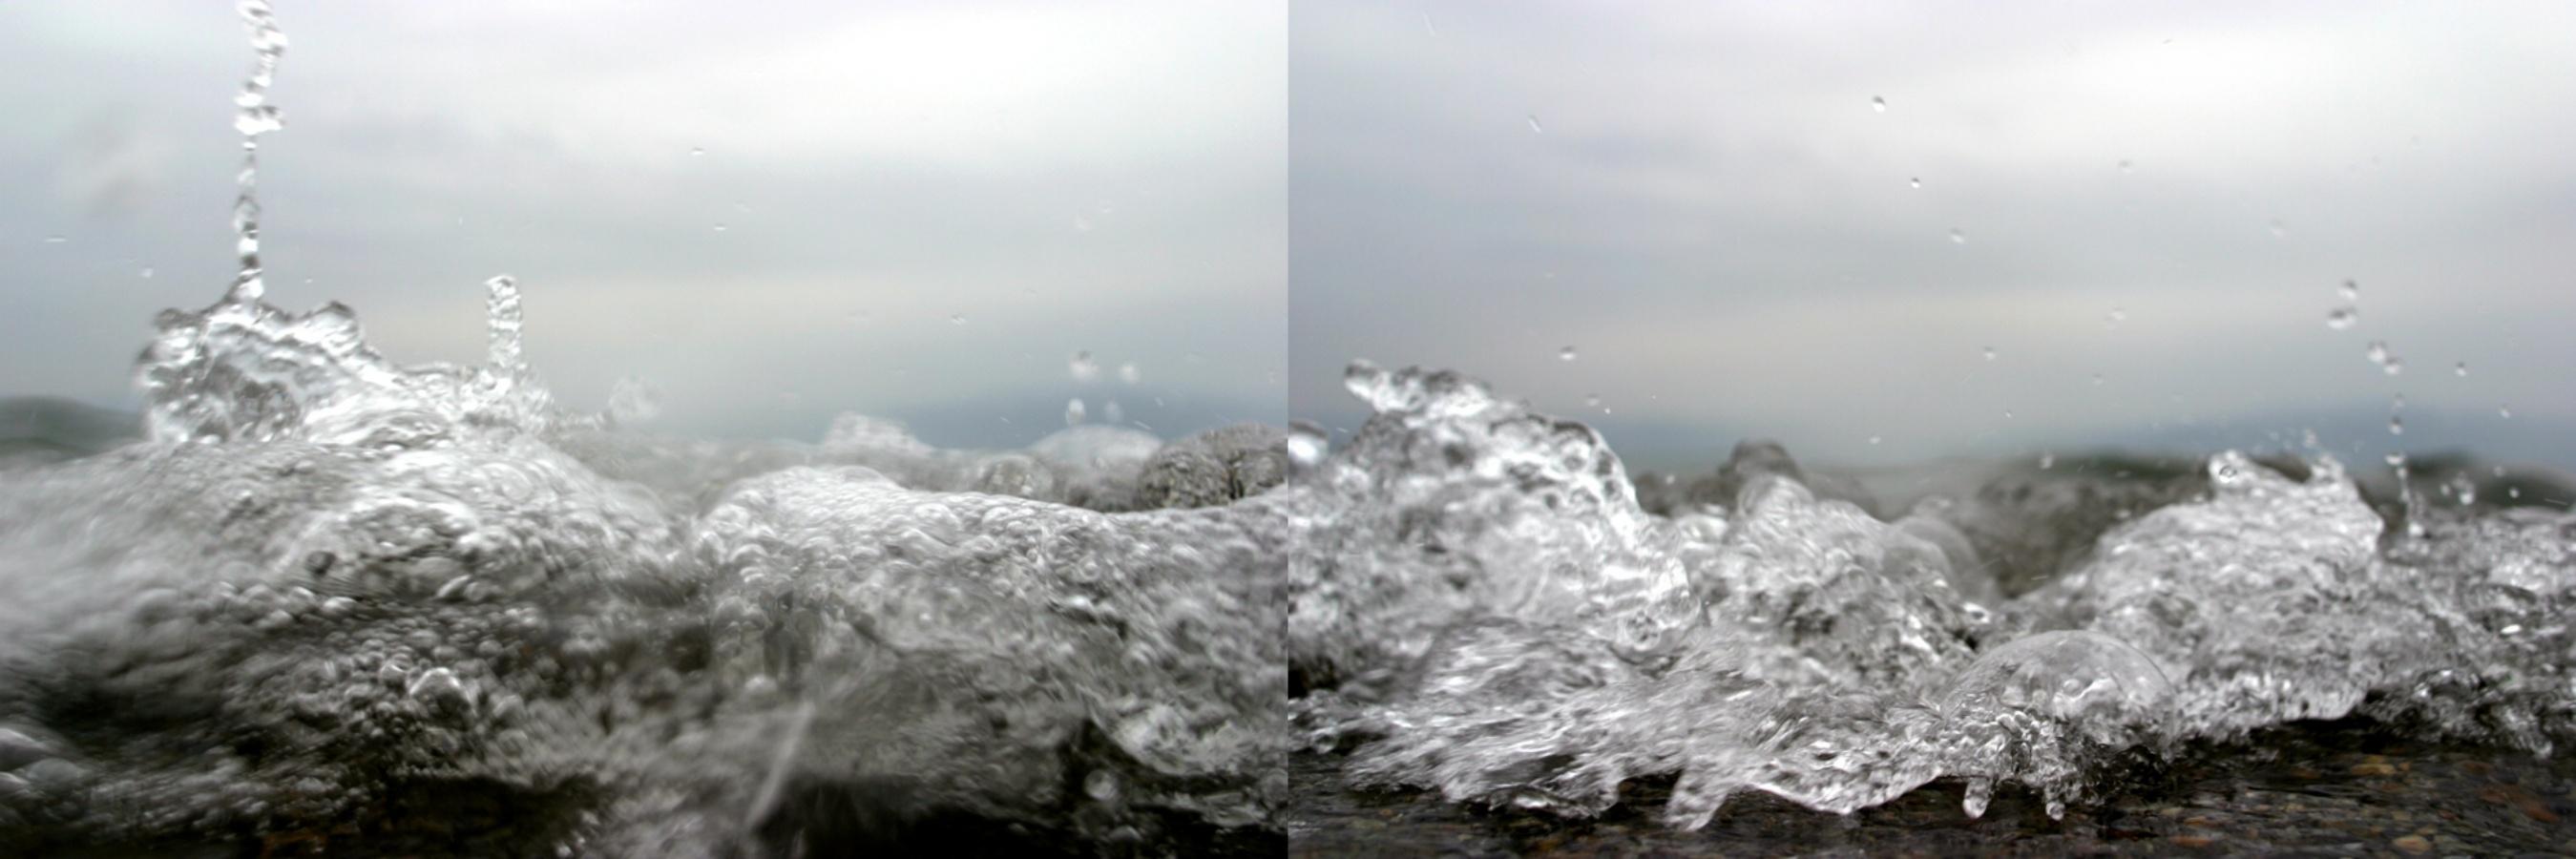 NAMI 009-010 – Syoin Kajii, Japanese Photography, Ocean, Waves, Water, Nature